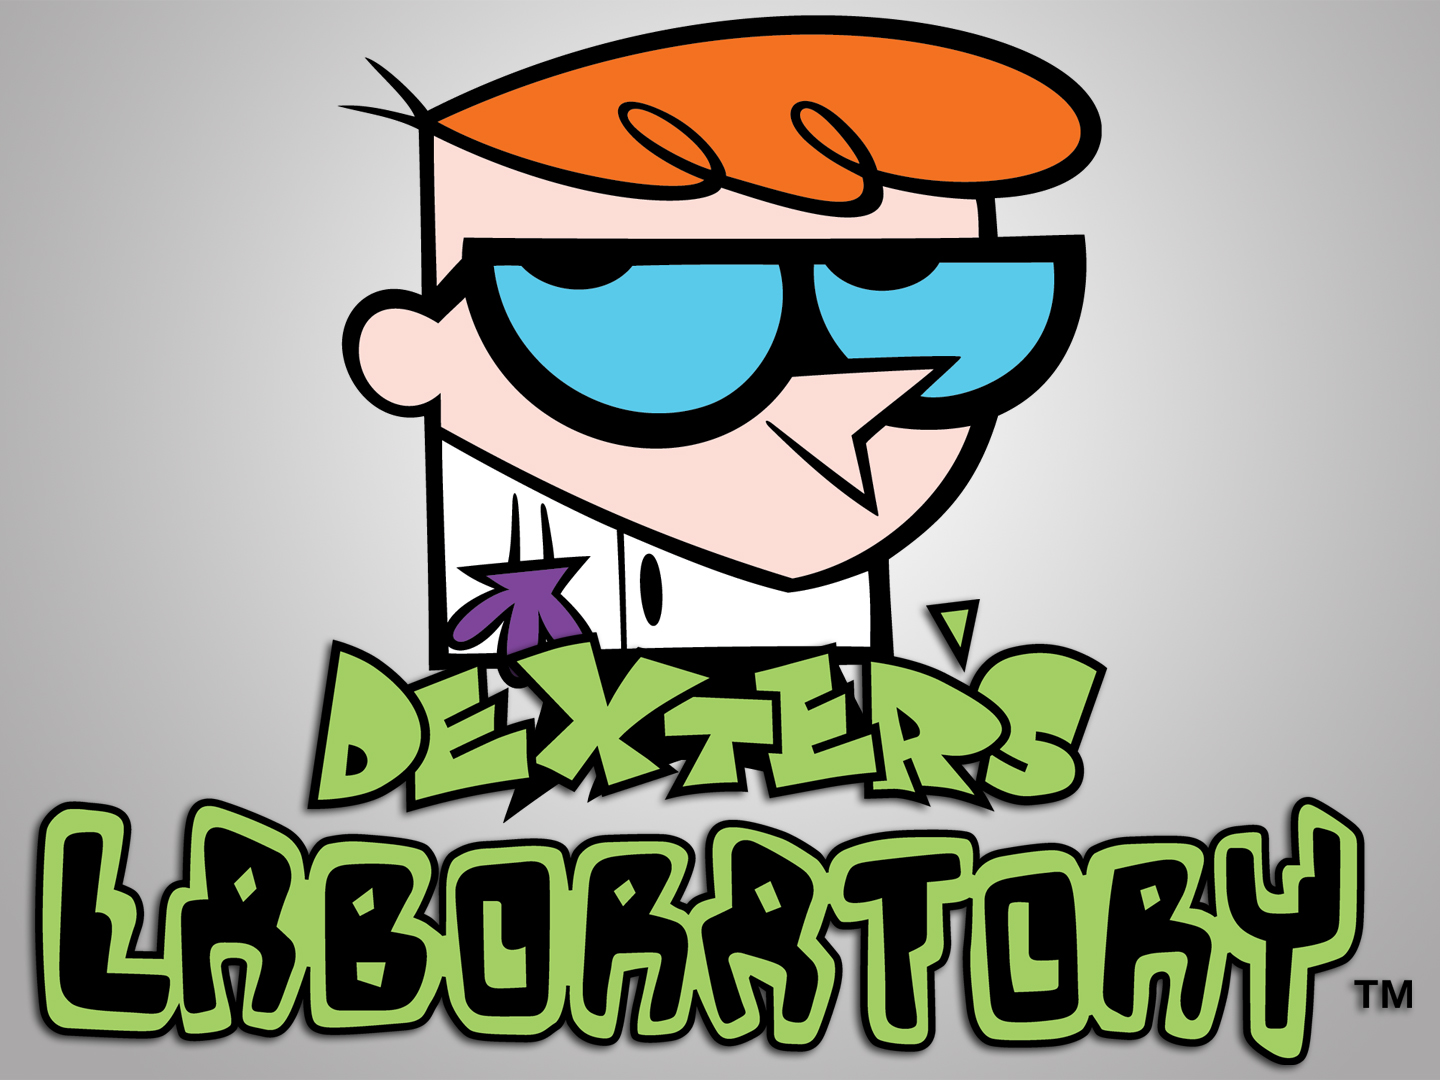 Dexters_Laboratory